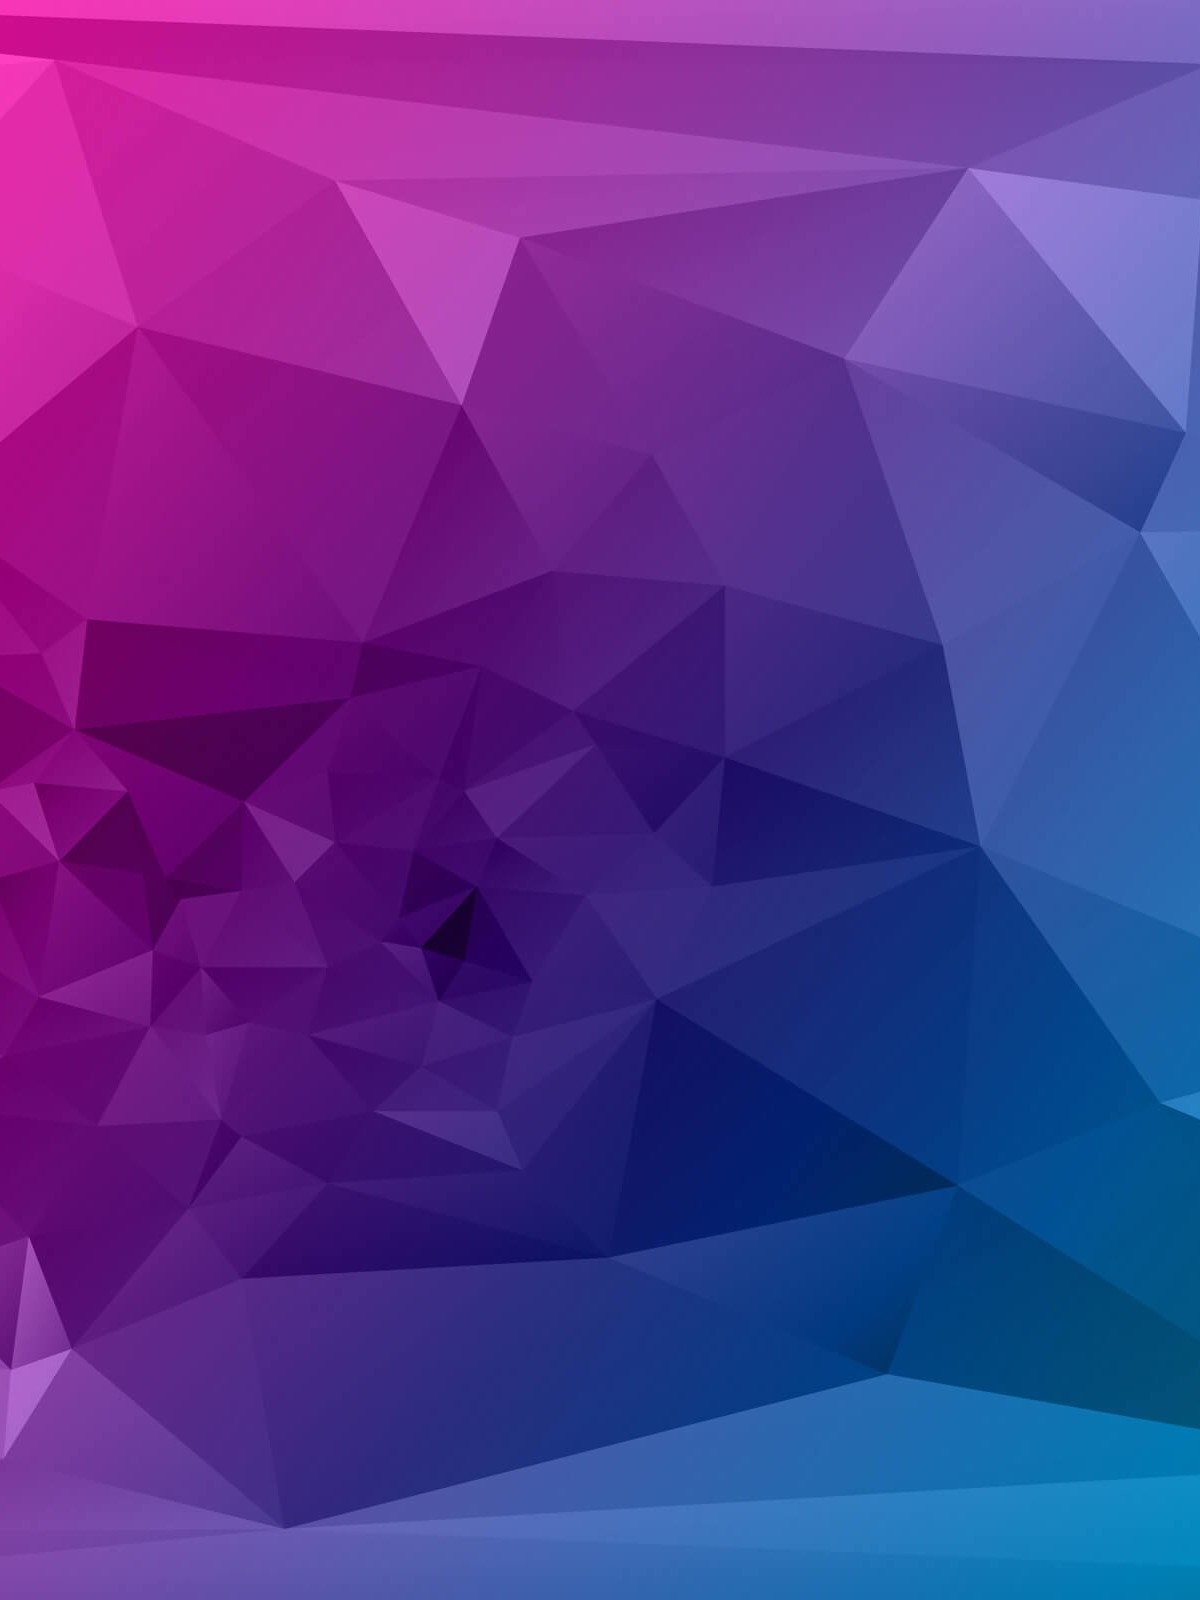 Purple Polygonal Background Wallpaper for Amazon Kindle Fire HDX